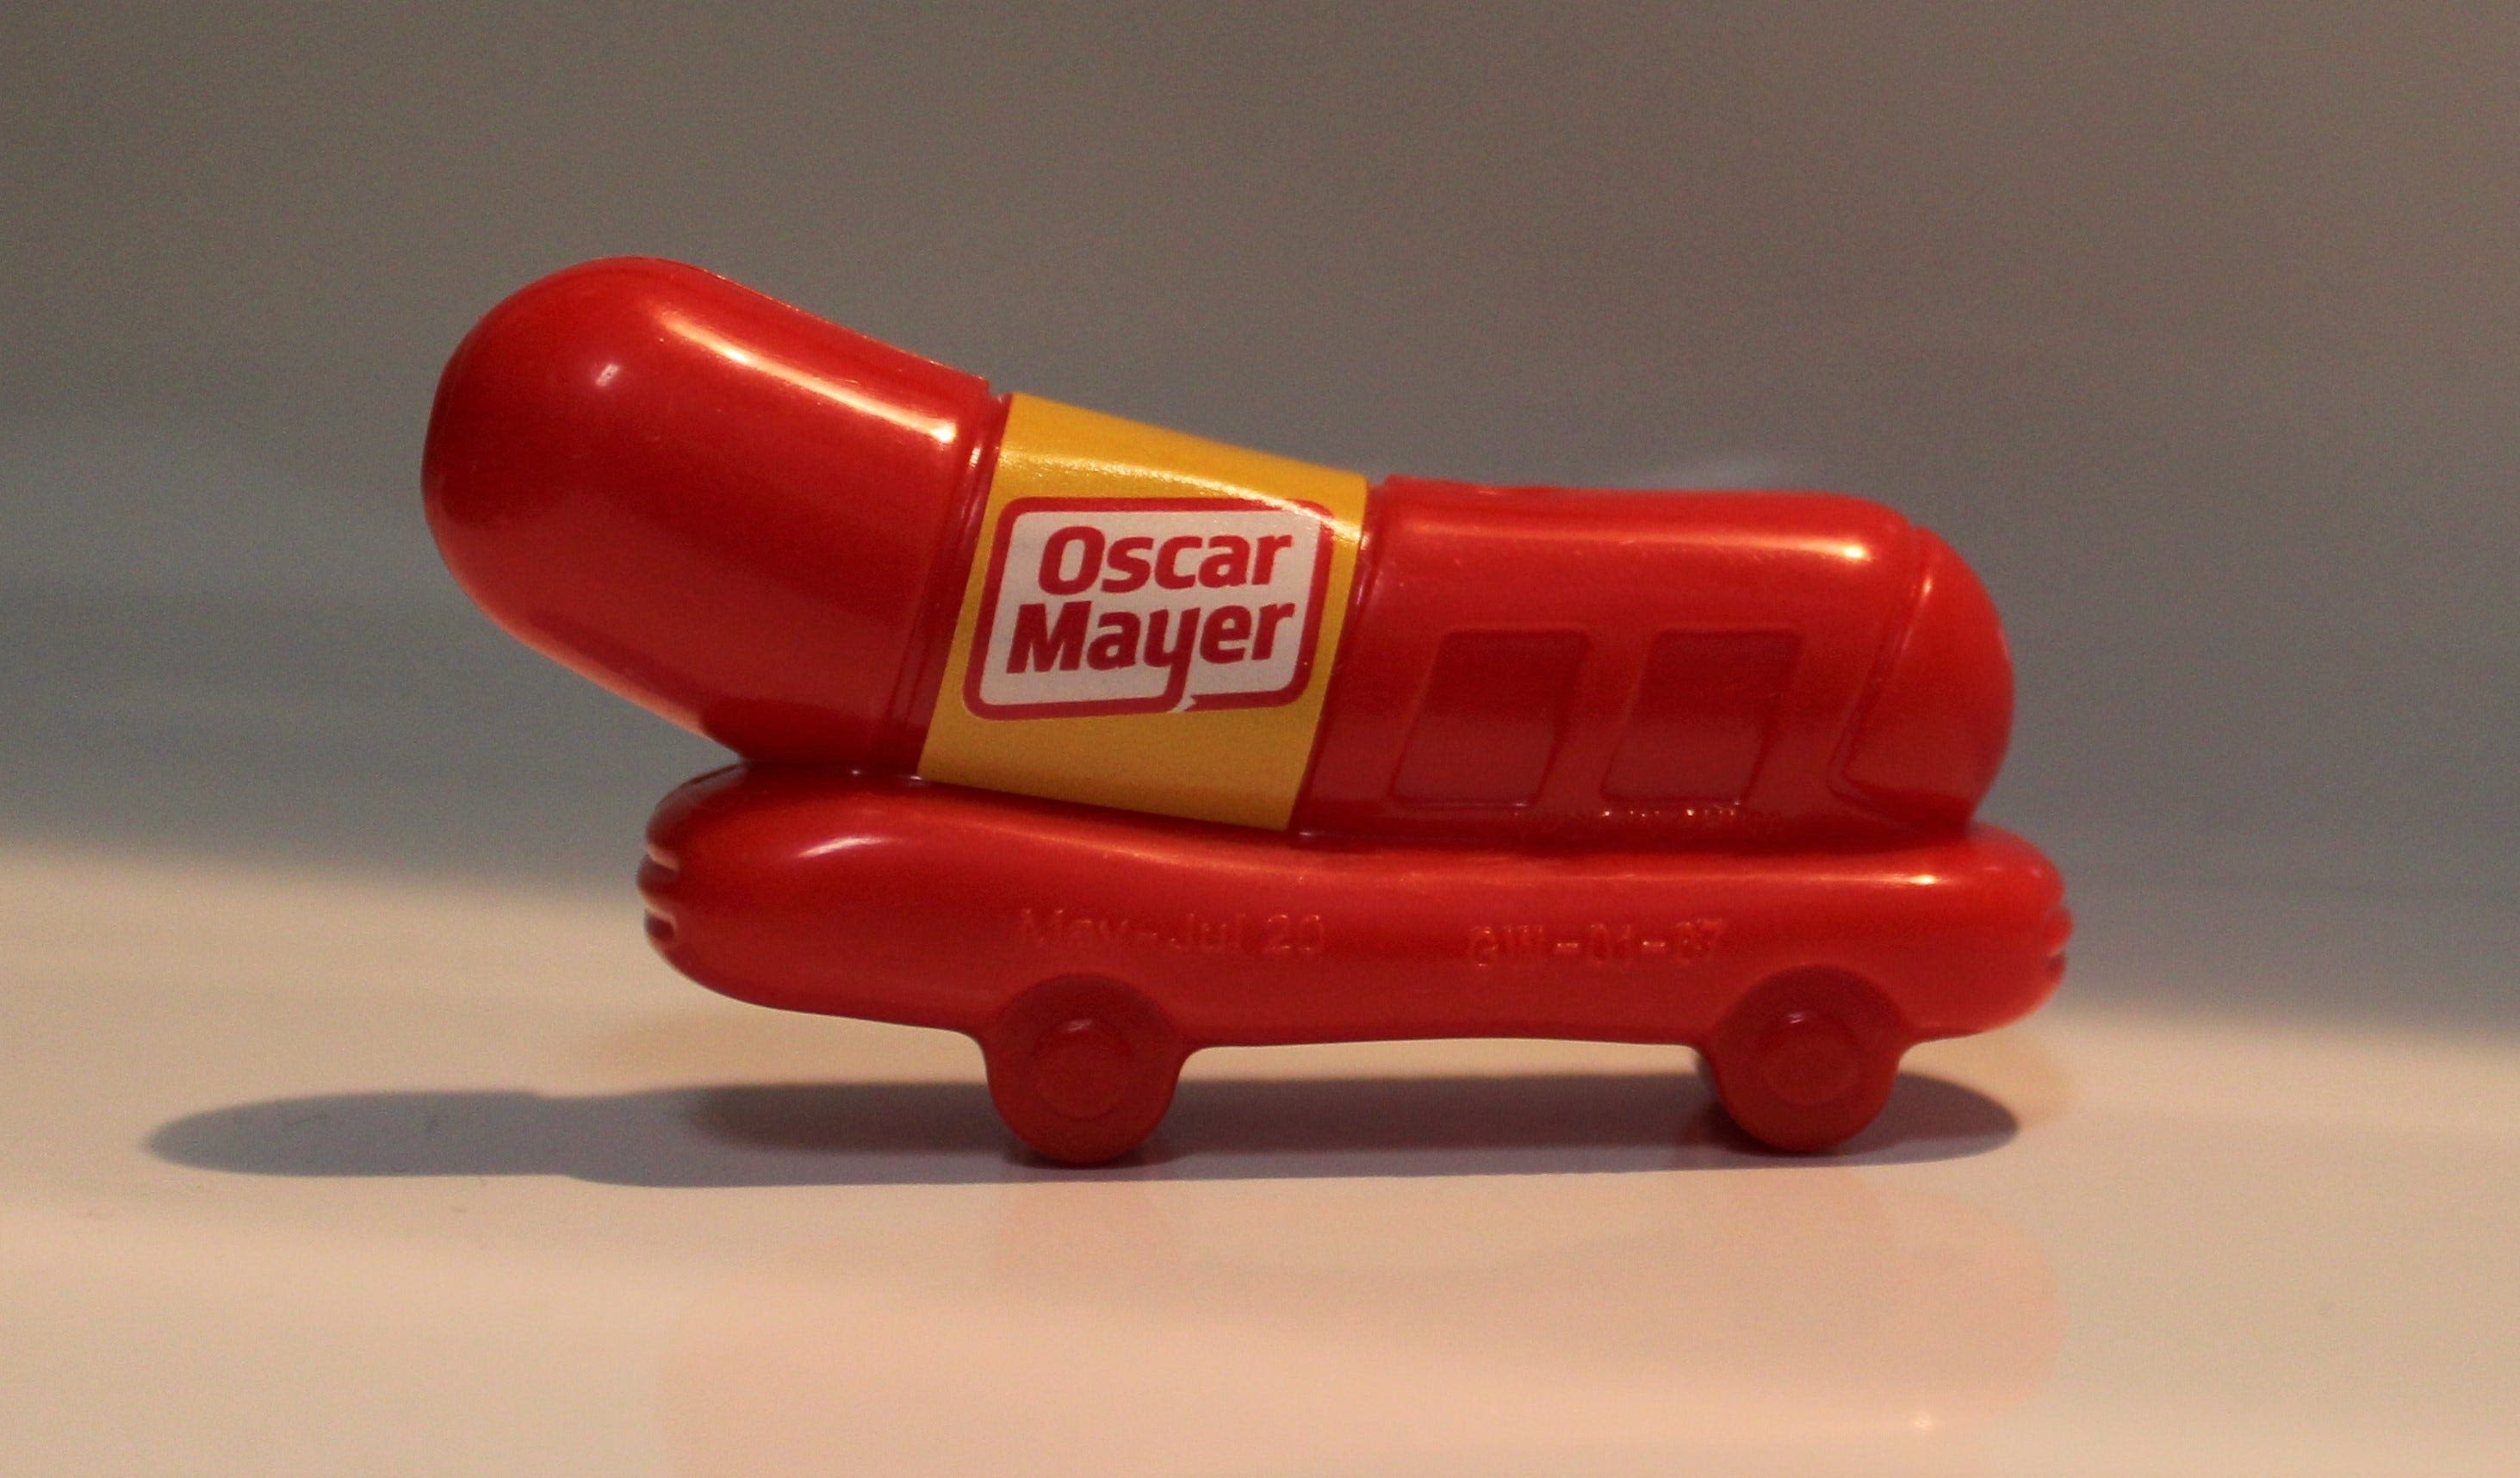 Oscar Mayer Wienermobile visits Richmond-area Krogers: Get wiener whistles, tours, selfies